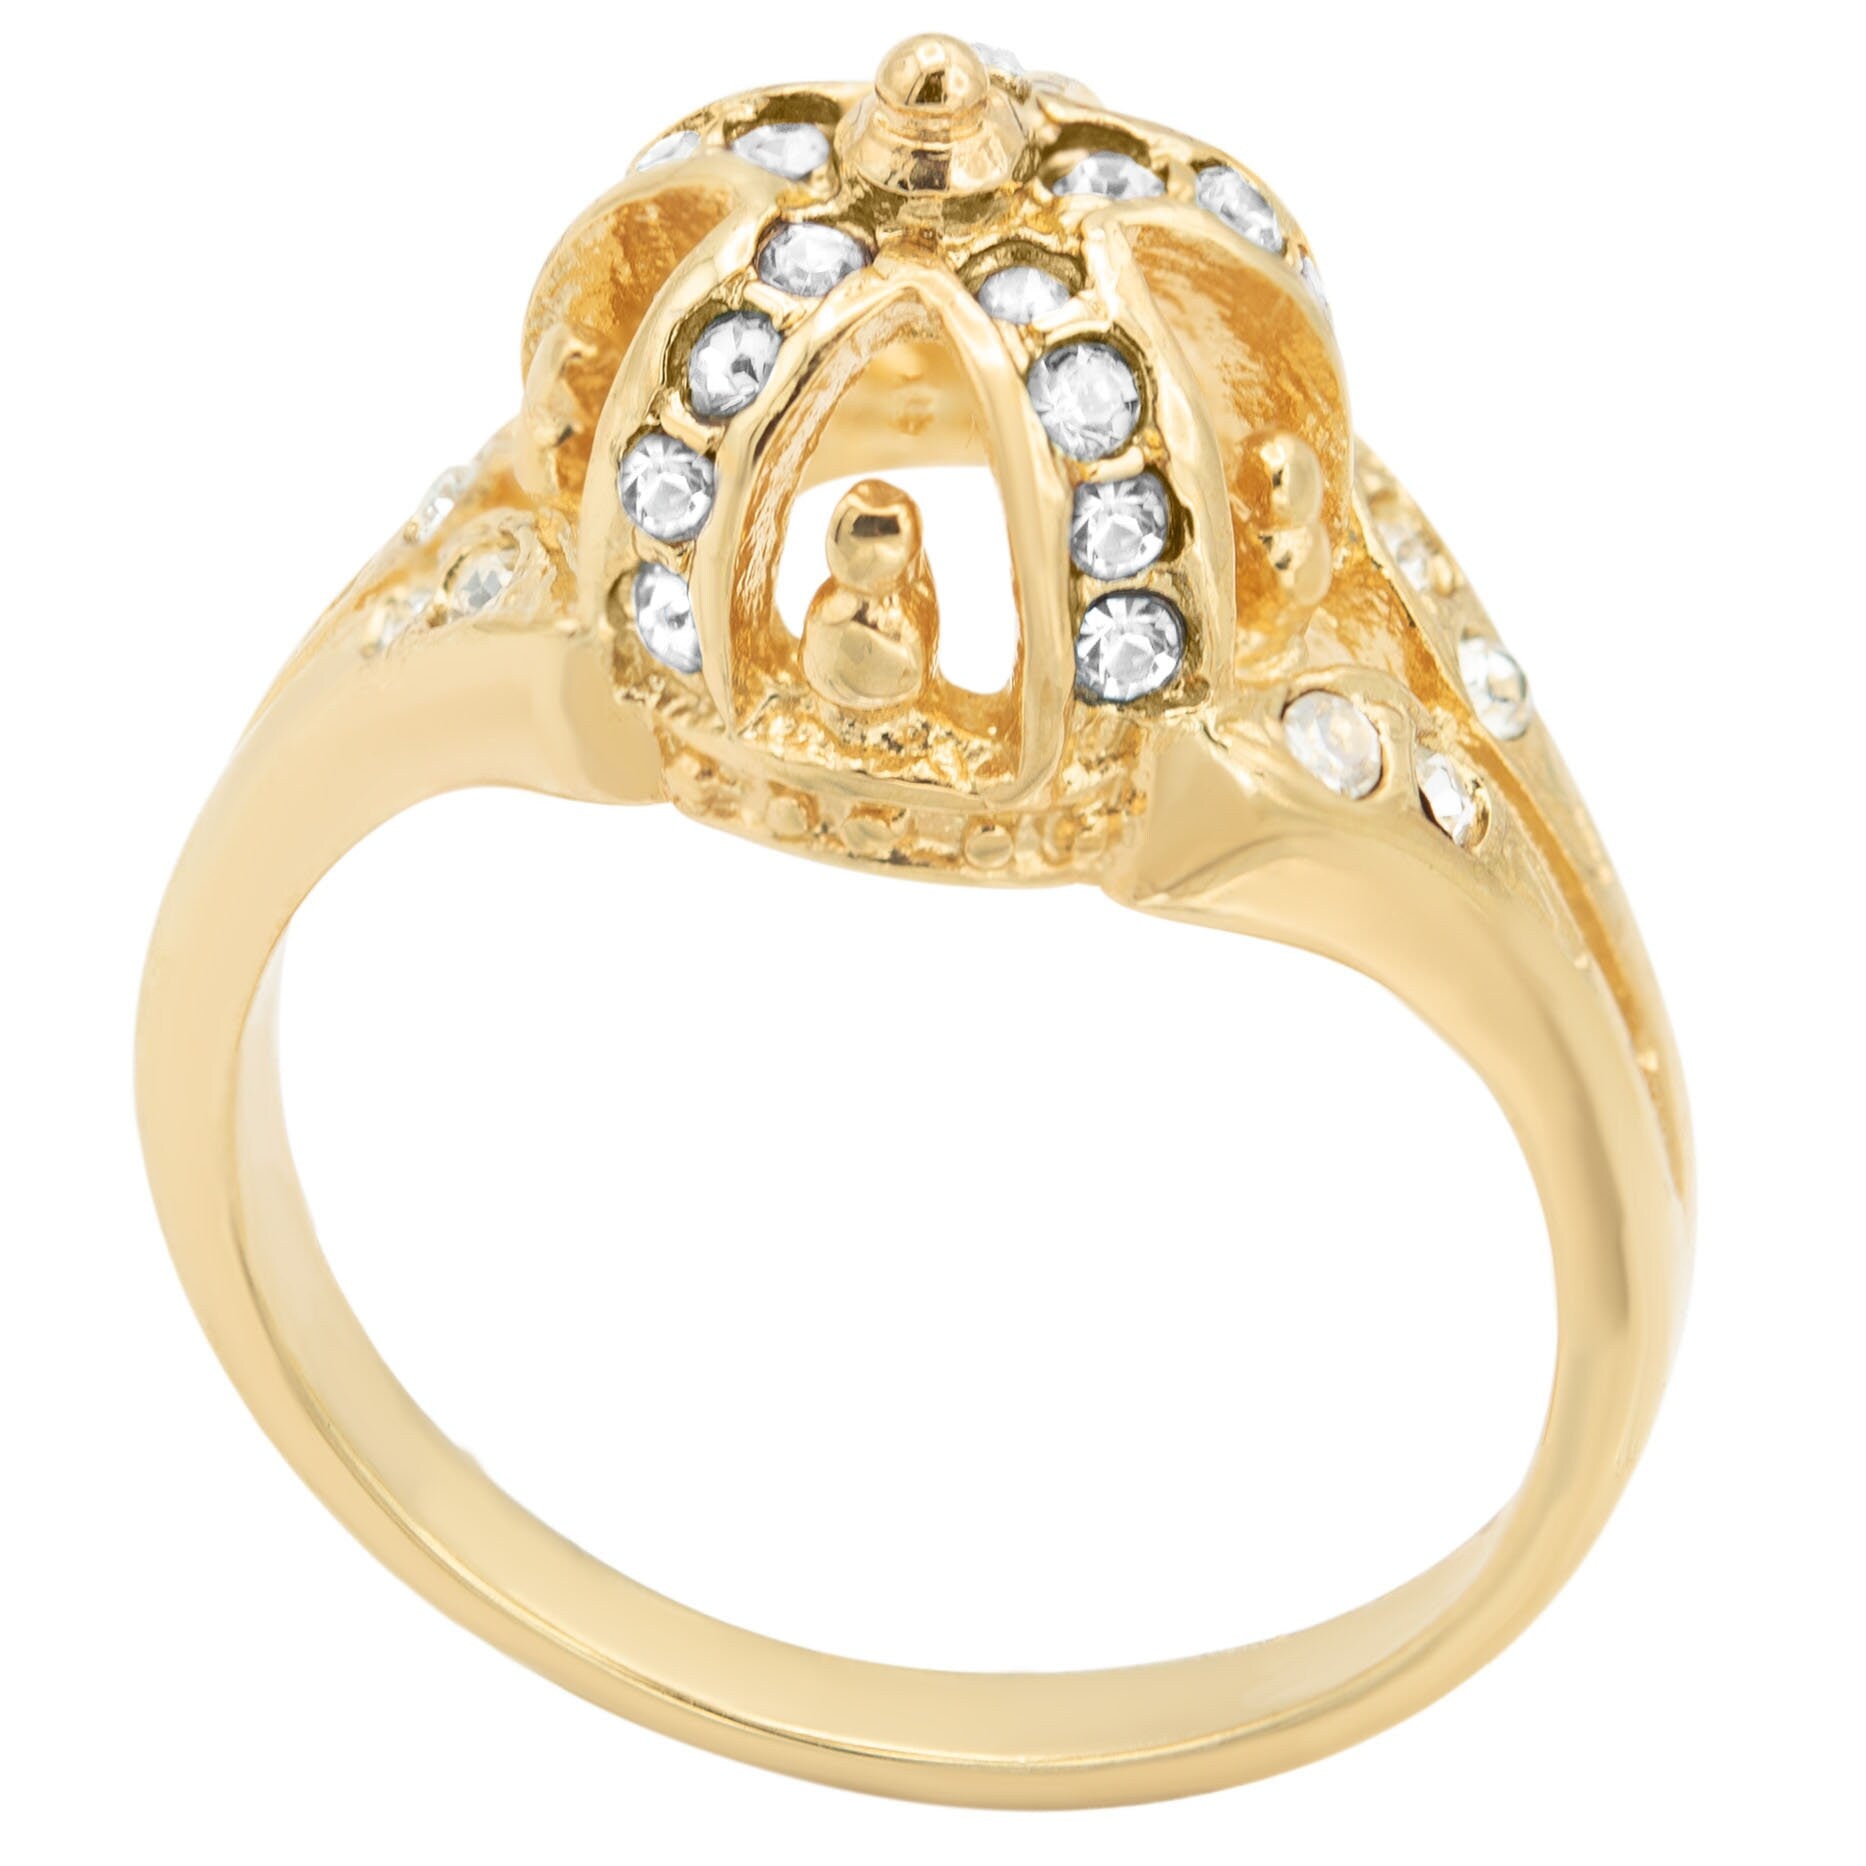 Elvish ring set with color changing alexandrite / Ariadne | Eden Garden  Jewelry™